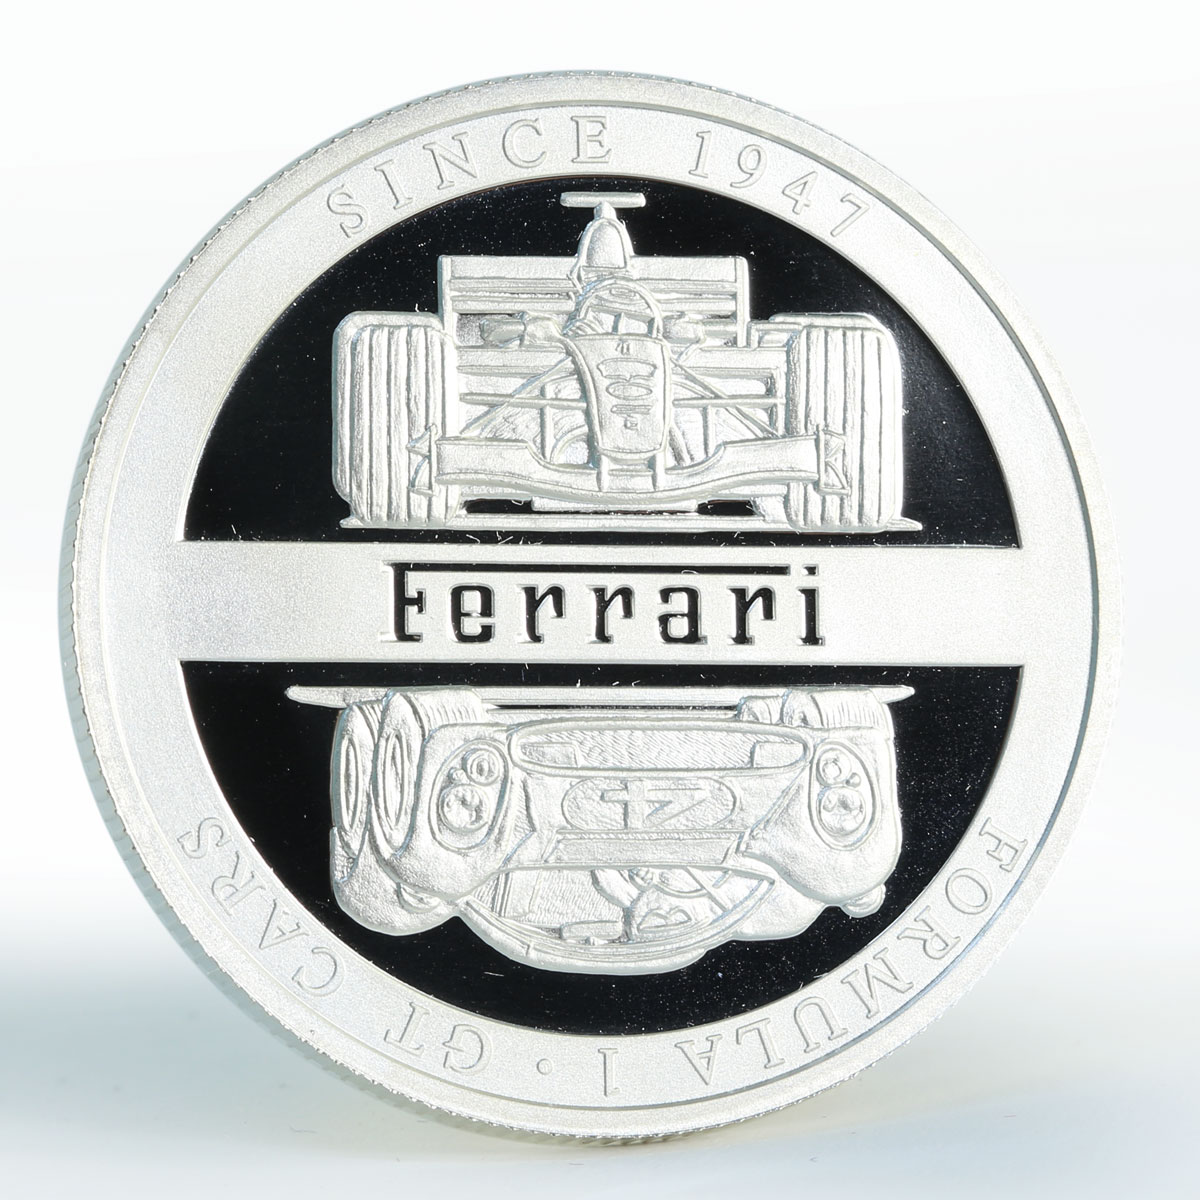 Congo 10 francs Formula 1 Ferrari cars silver coin 2004